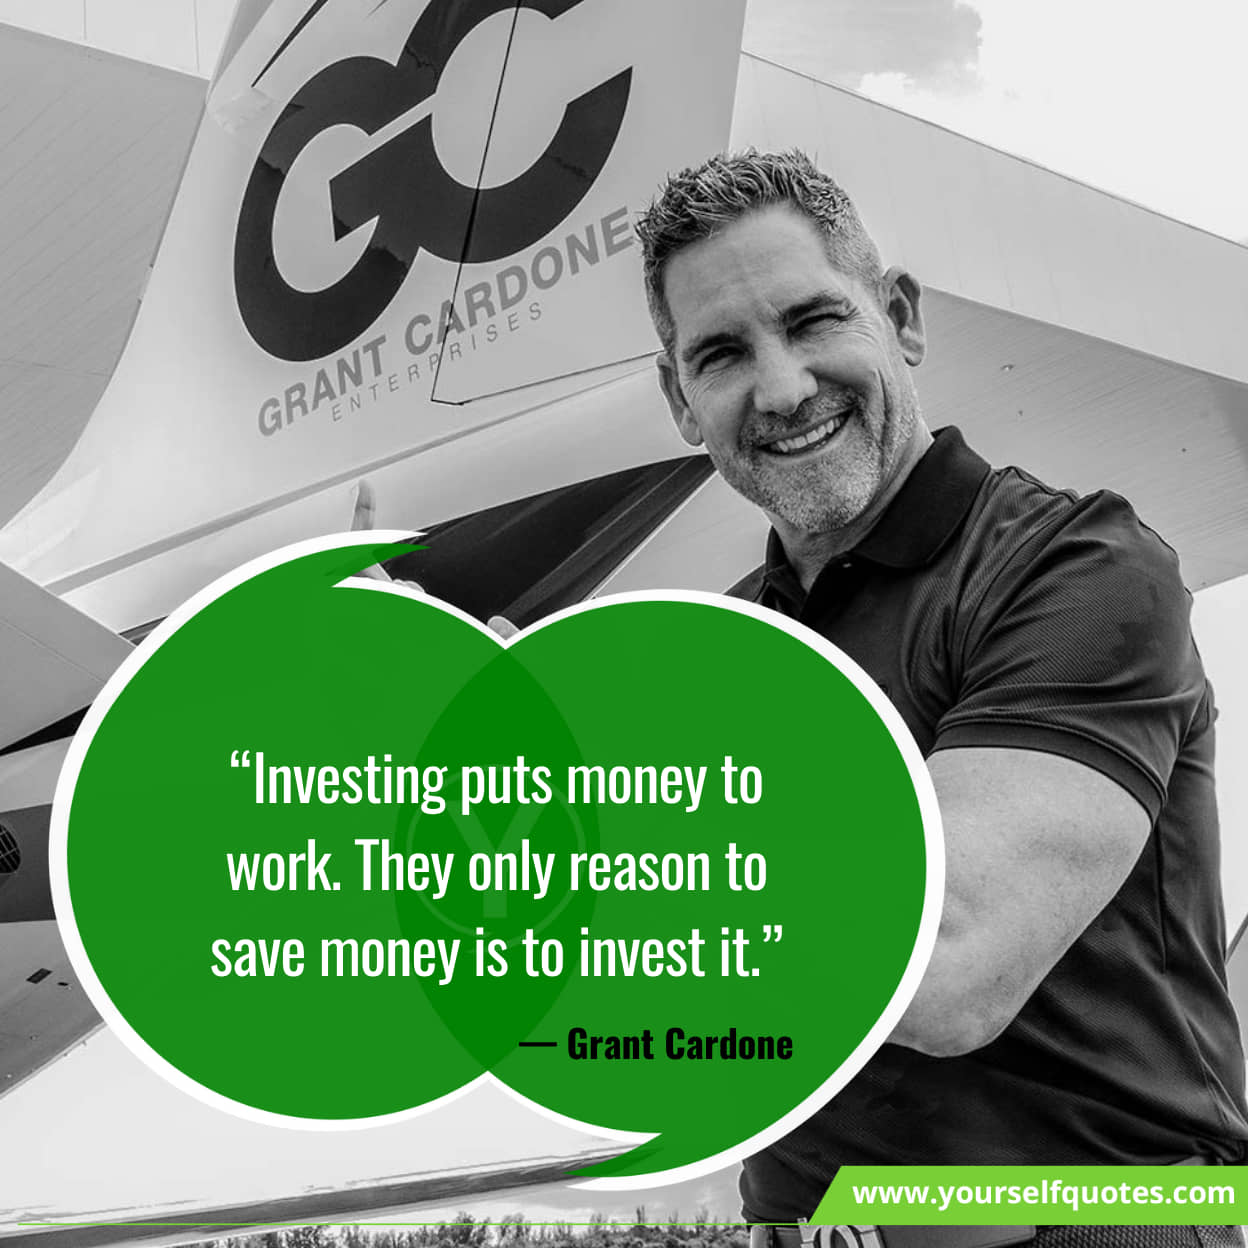 Inspiring Quotes About Saving Money